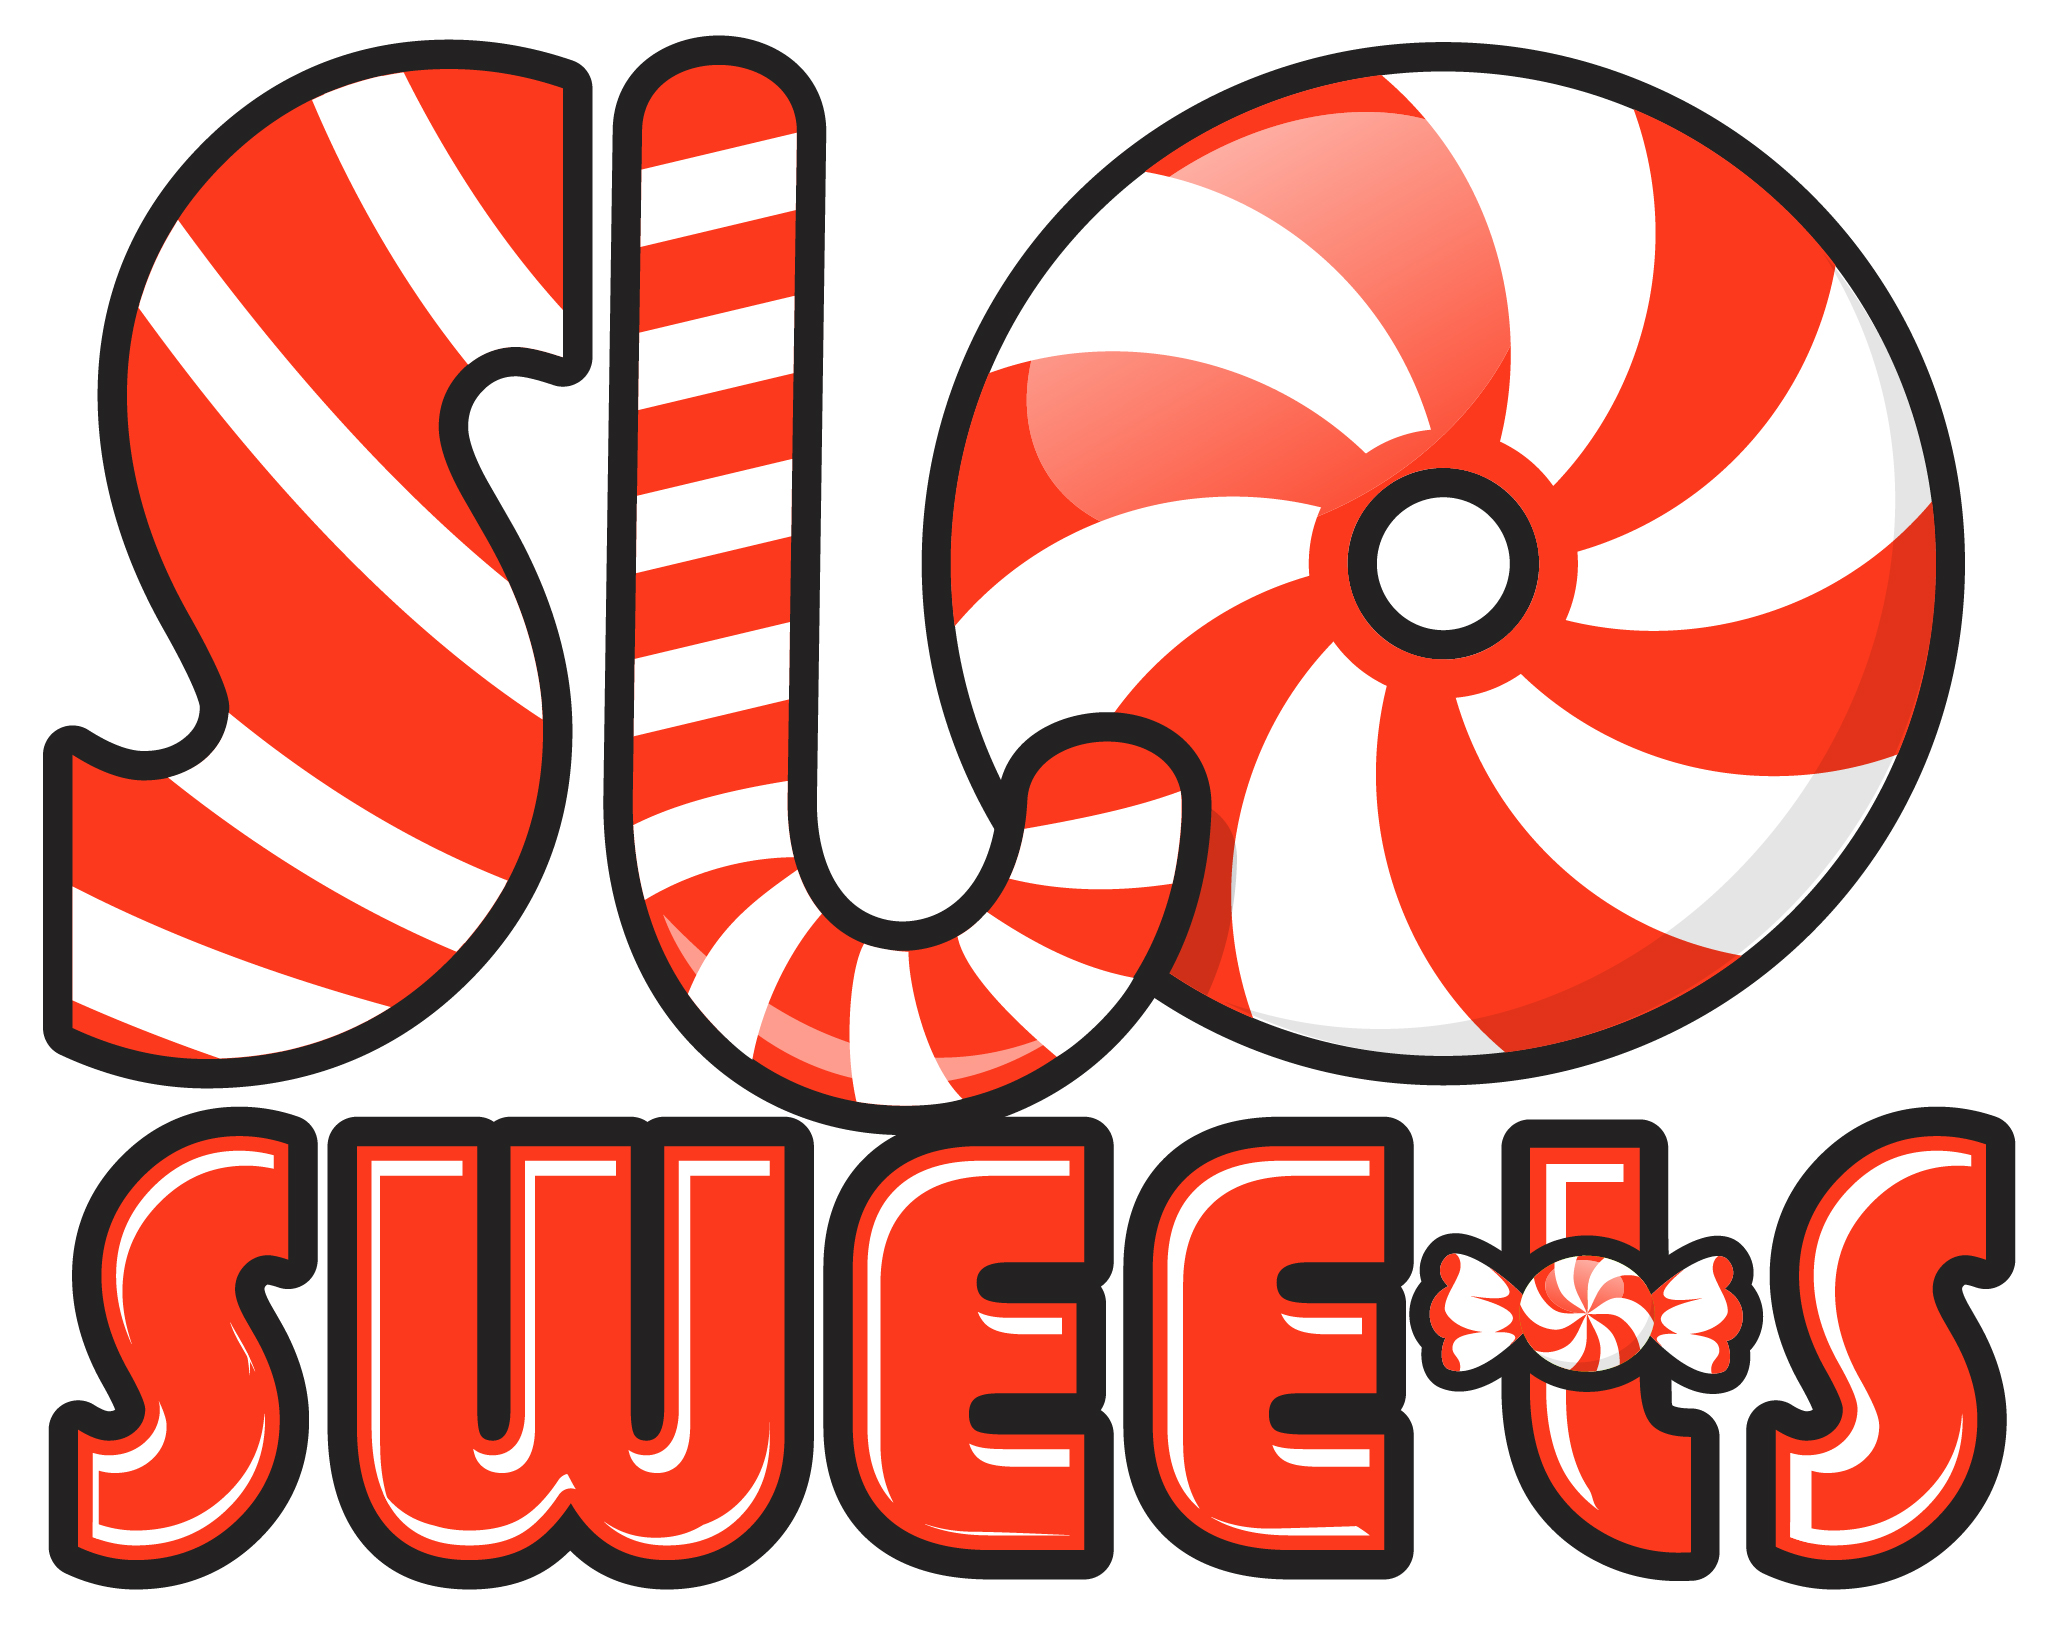 SLO Sweets